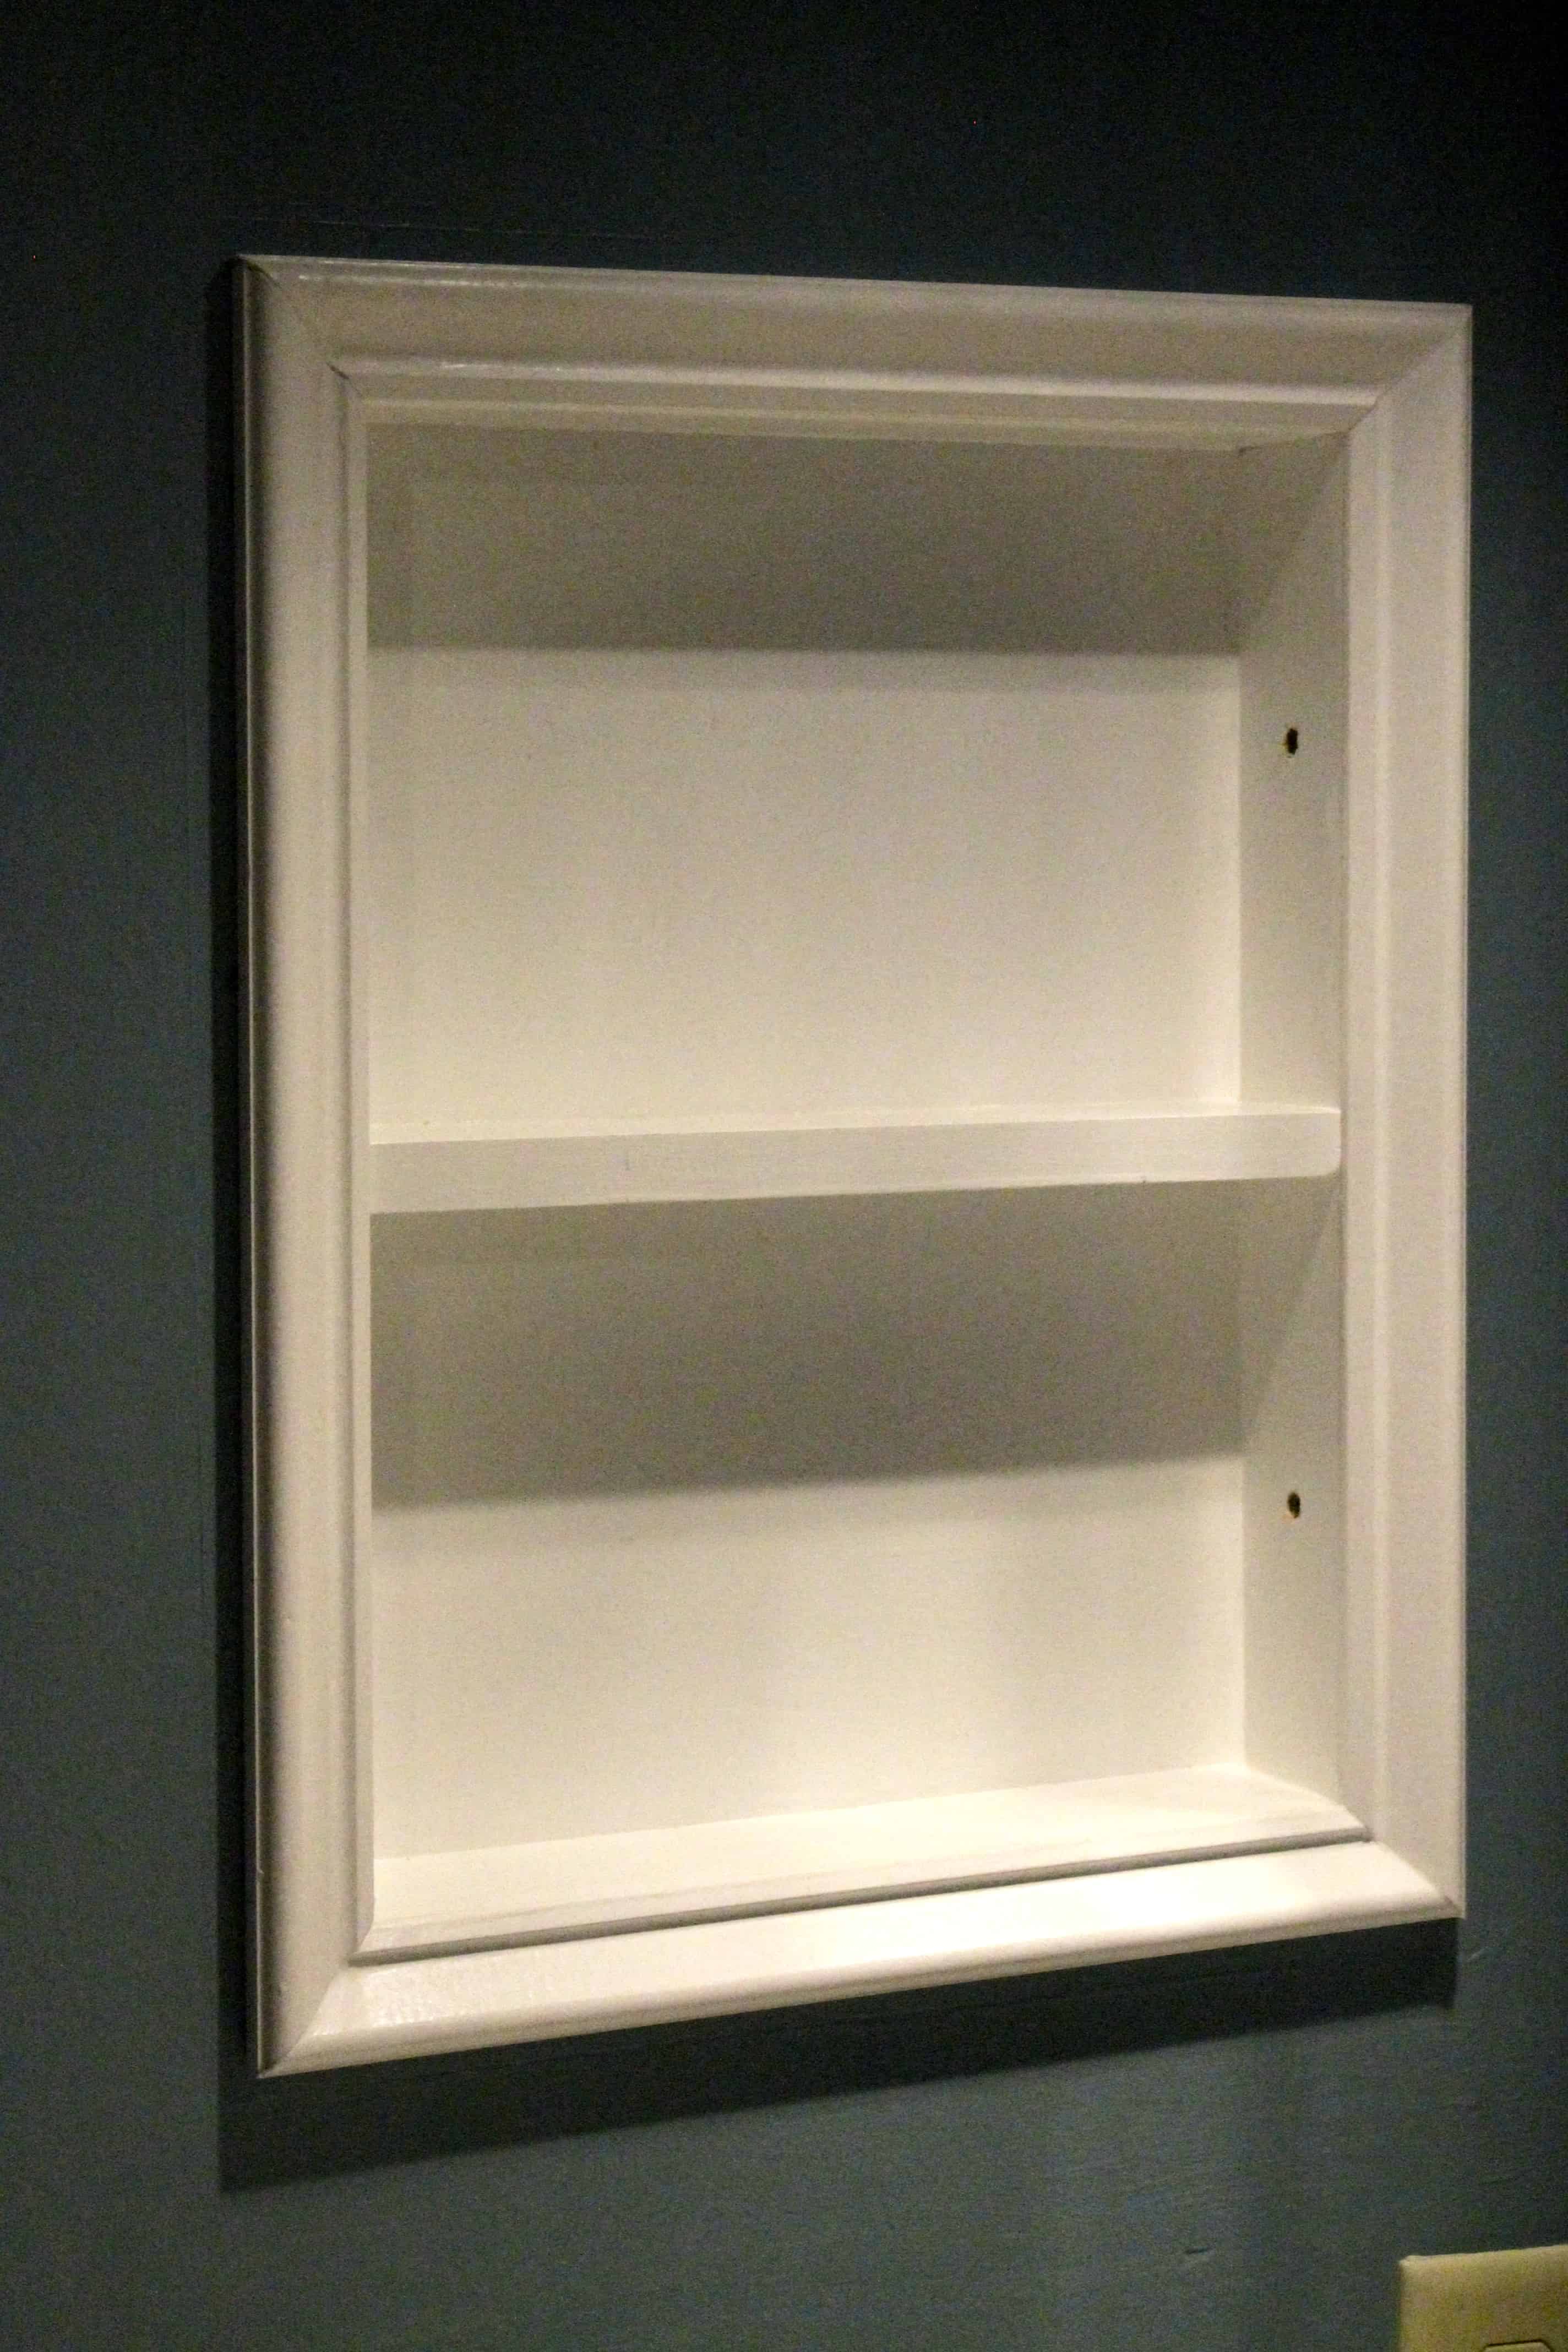 Converted metal medicine cabinet into open shelves I was